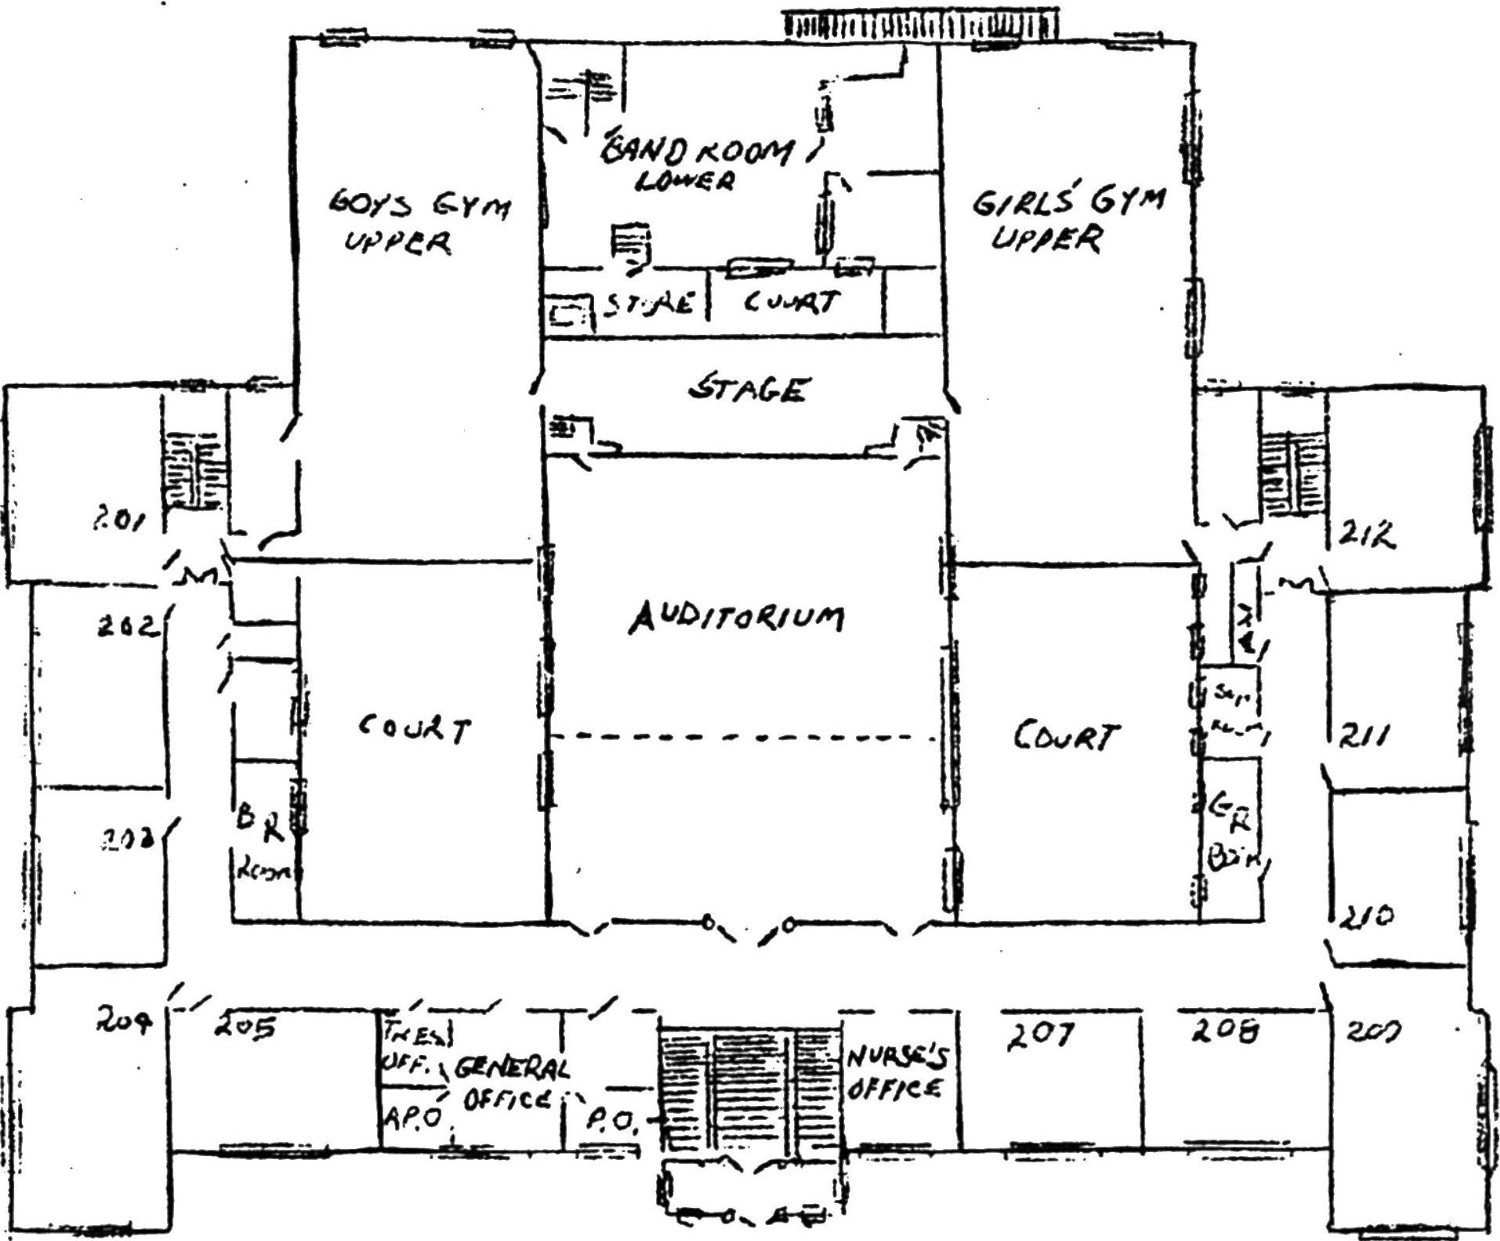 Ralph Waldo Emerson School, Gary Indiana Second Floor Plan